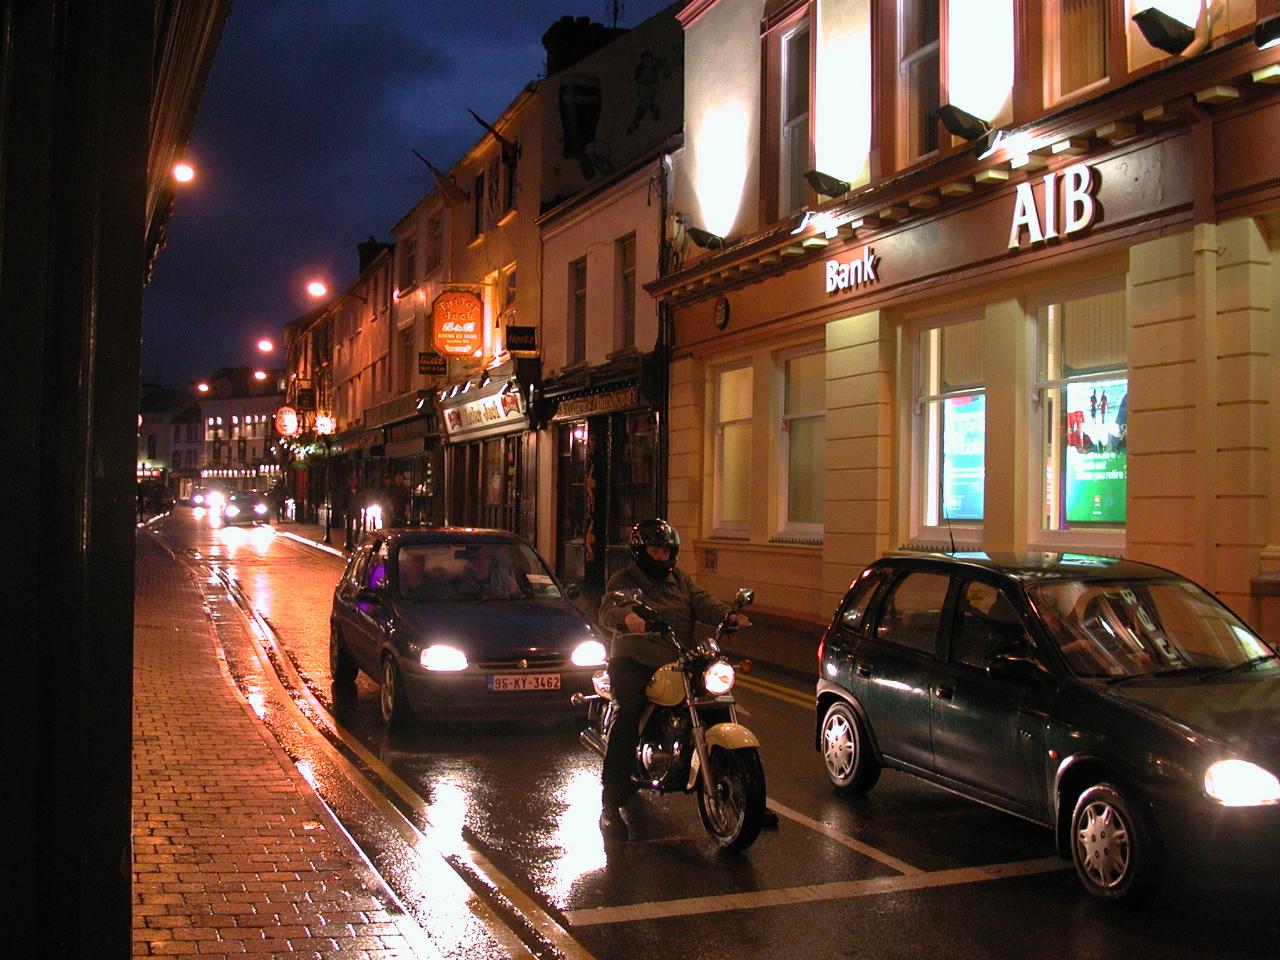 Downtown Killarney at dusk